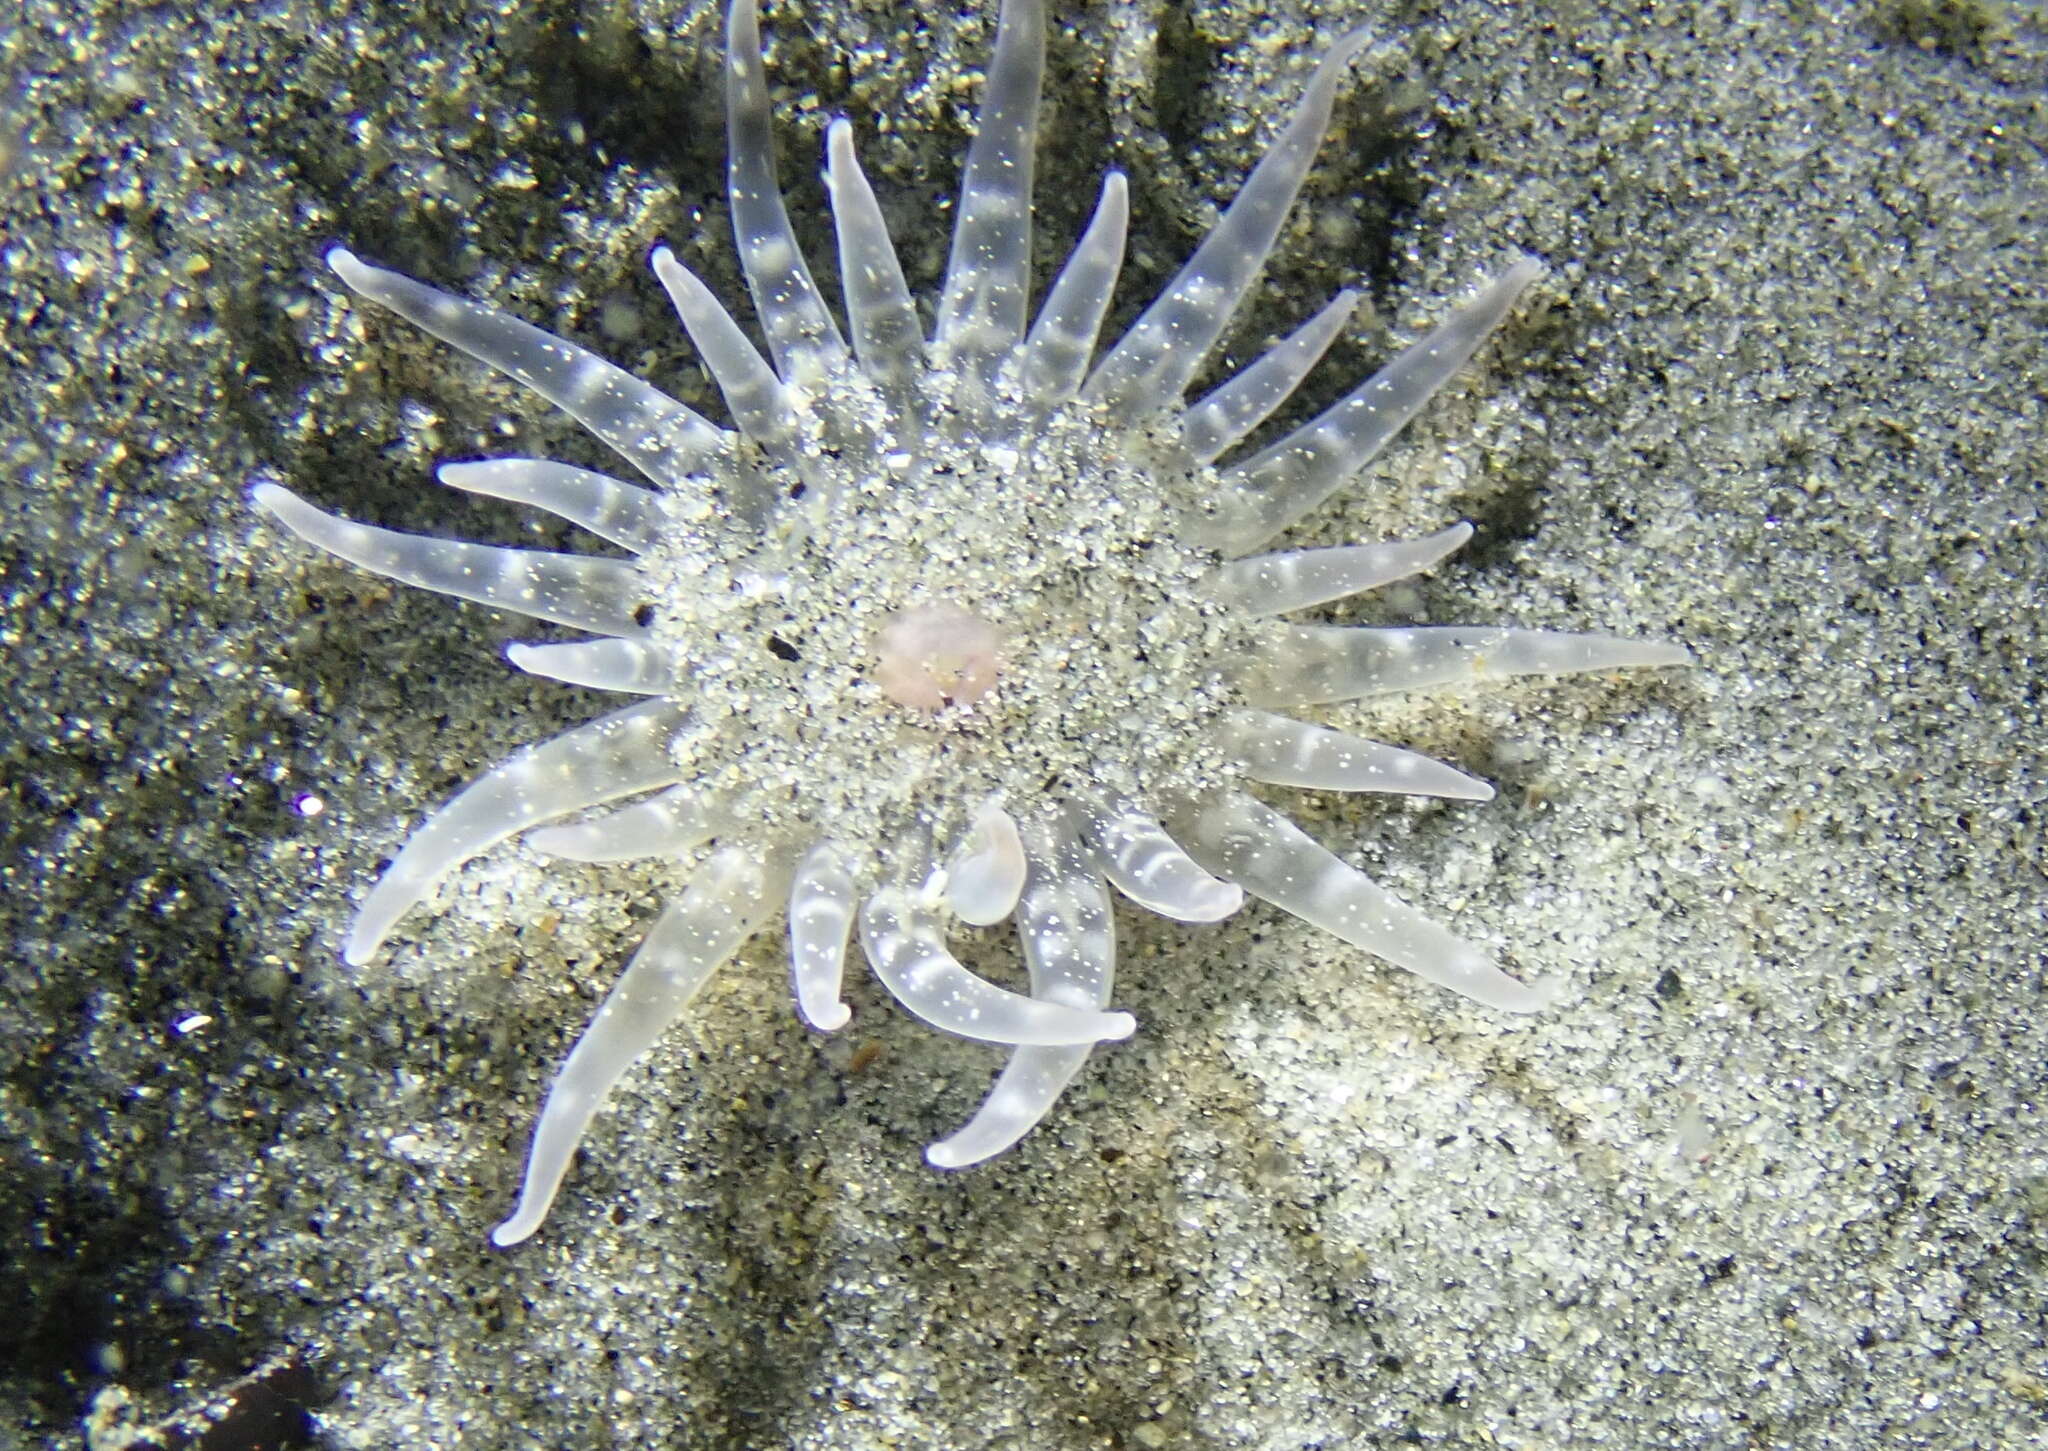 Image of giant burrowing anemone